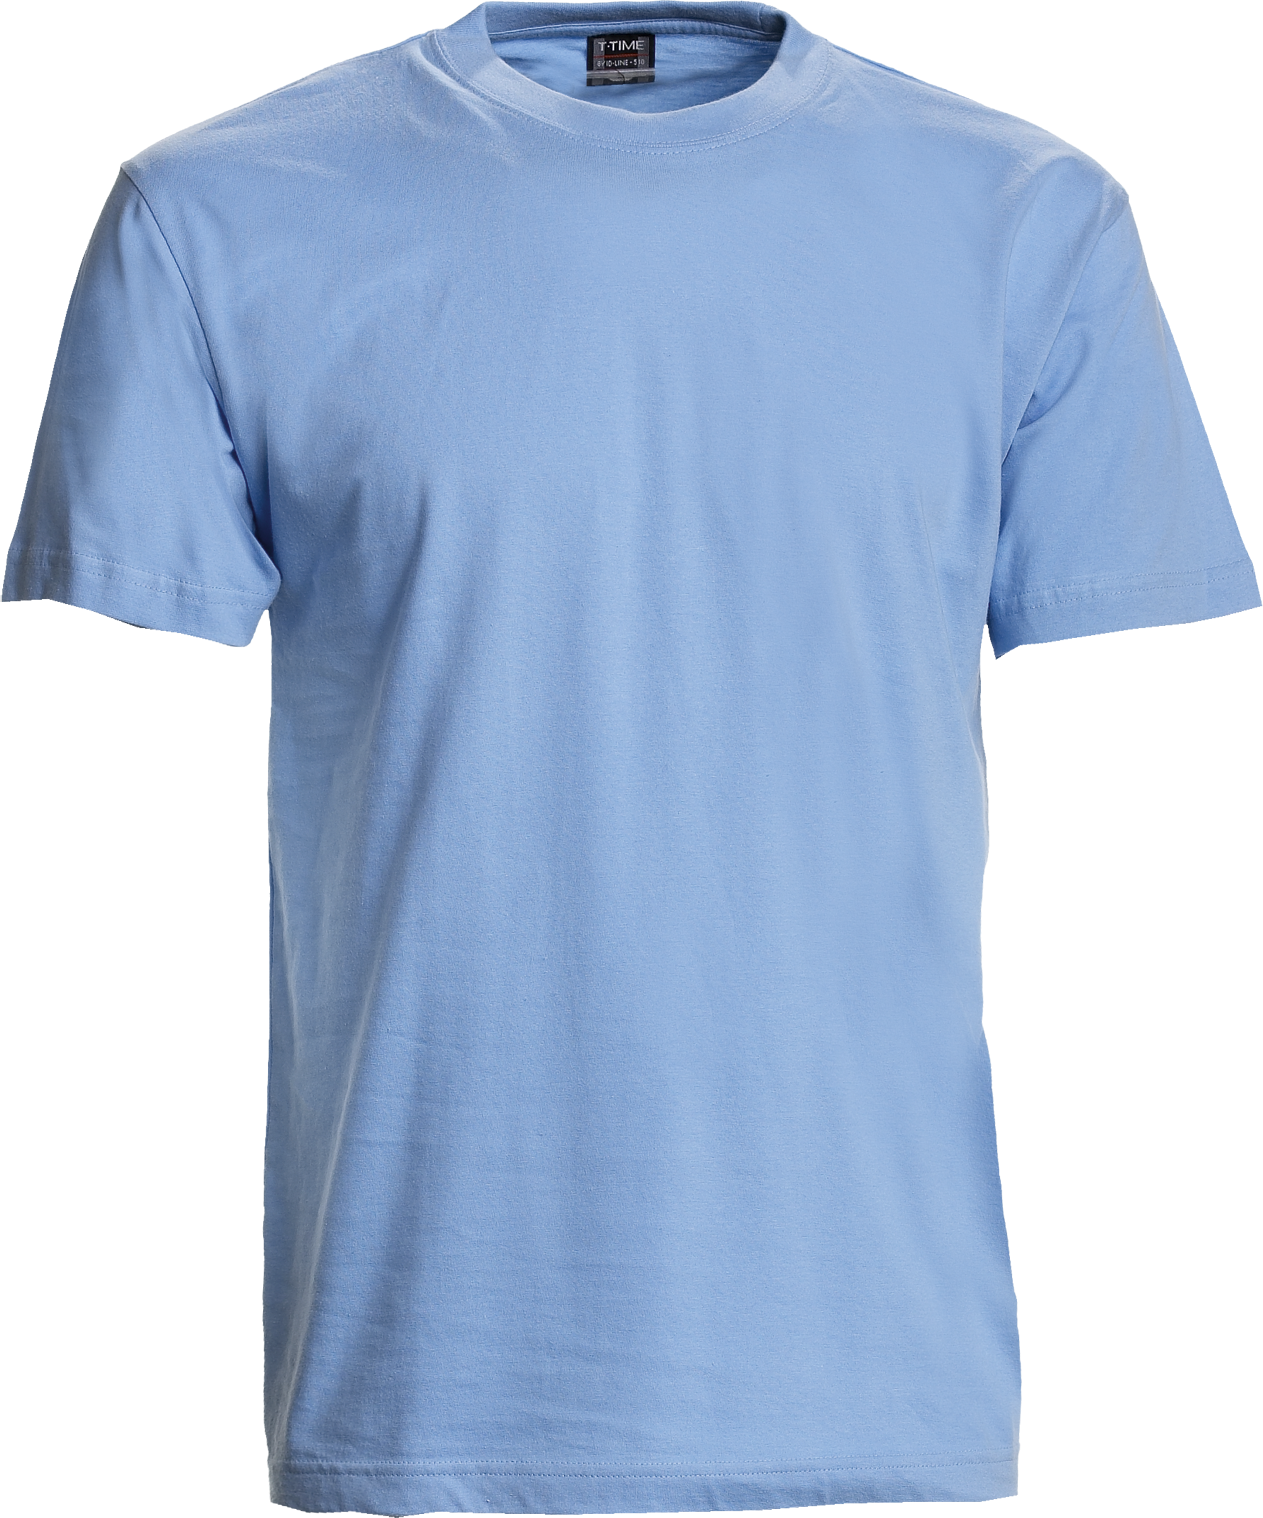 Hellblau Herren T-Shirt, Basic (8150101)